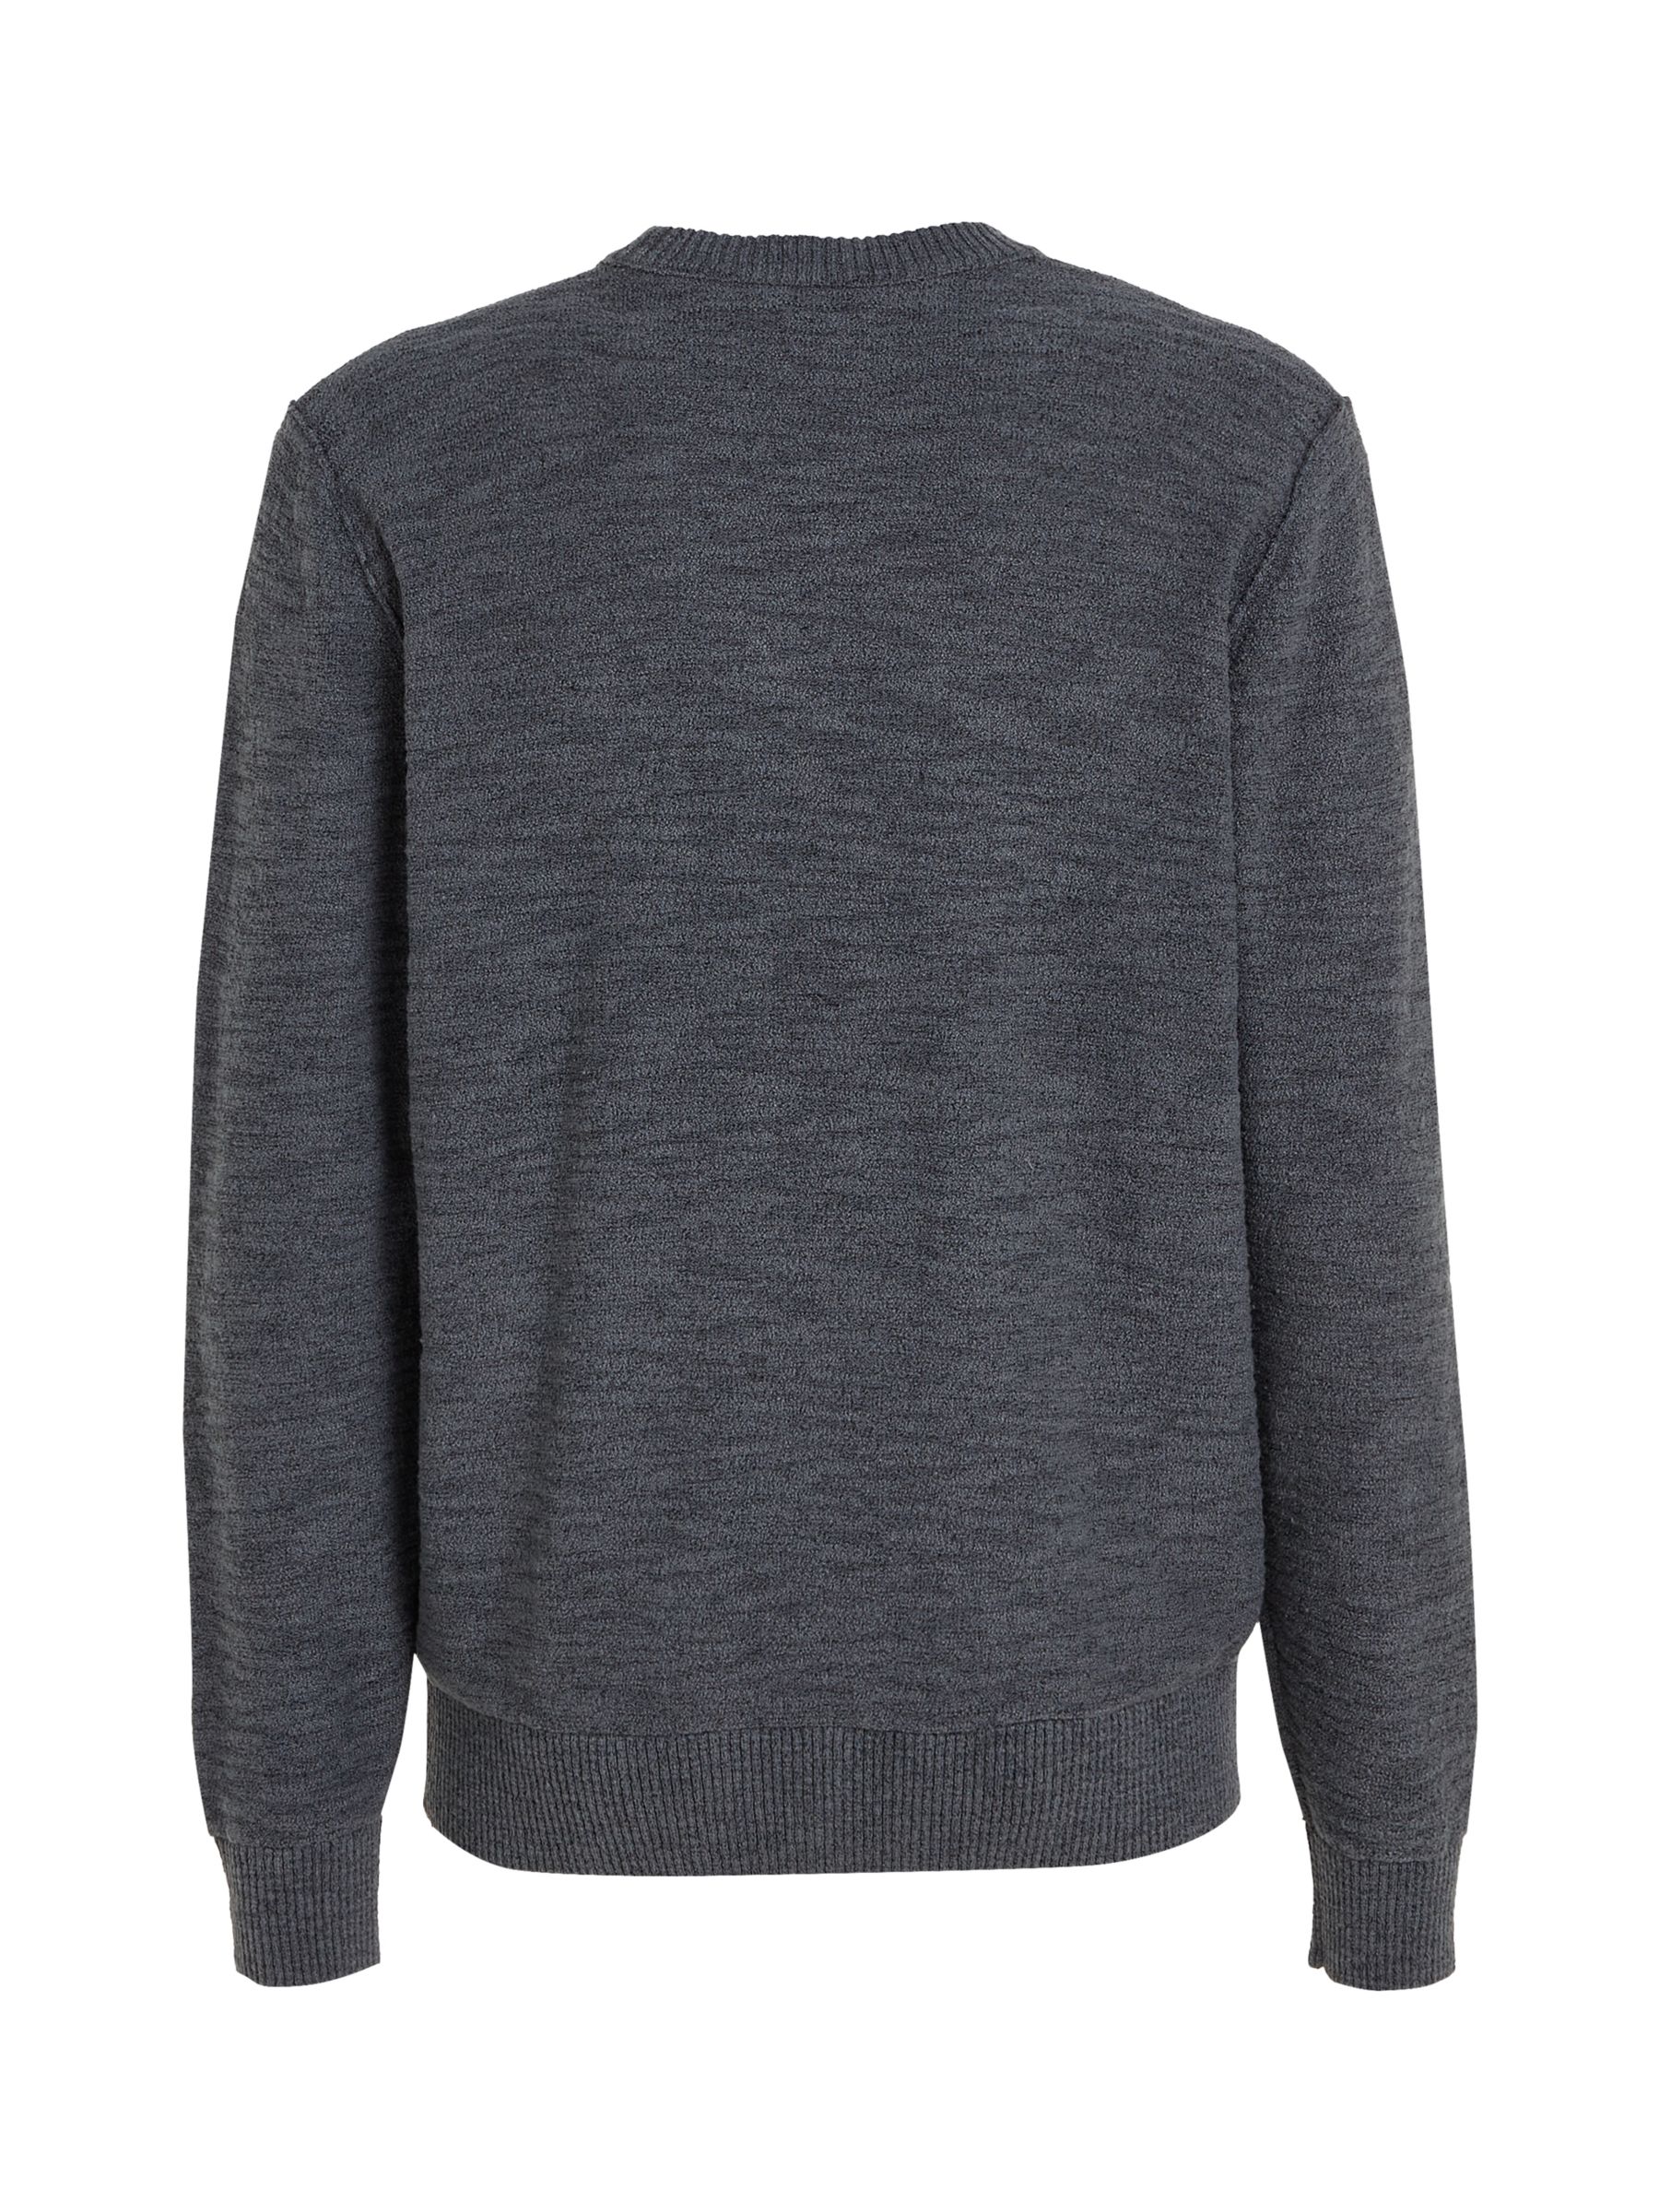 Calvin Klein Winter Slub Pullover Jumper, Grey, S